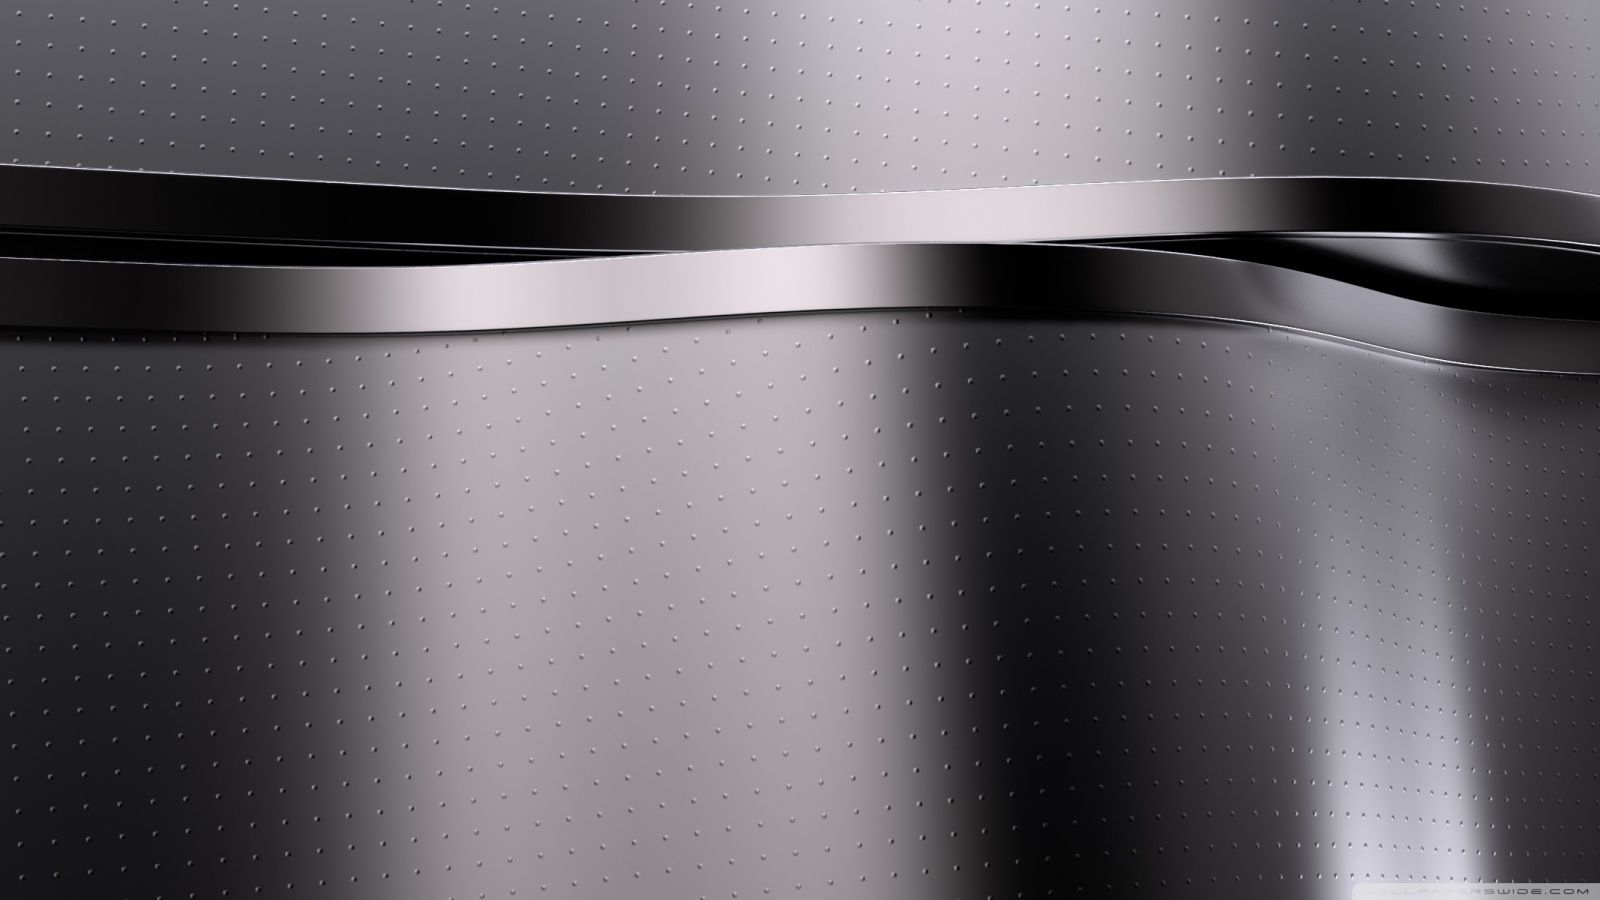 Stainless Steel Desktop Background. Man of Steel Wallpaper, Superman Man of Steel Wallpaper and Steel Wallpaper